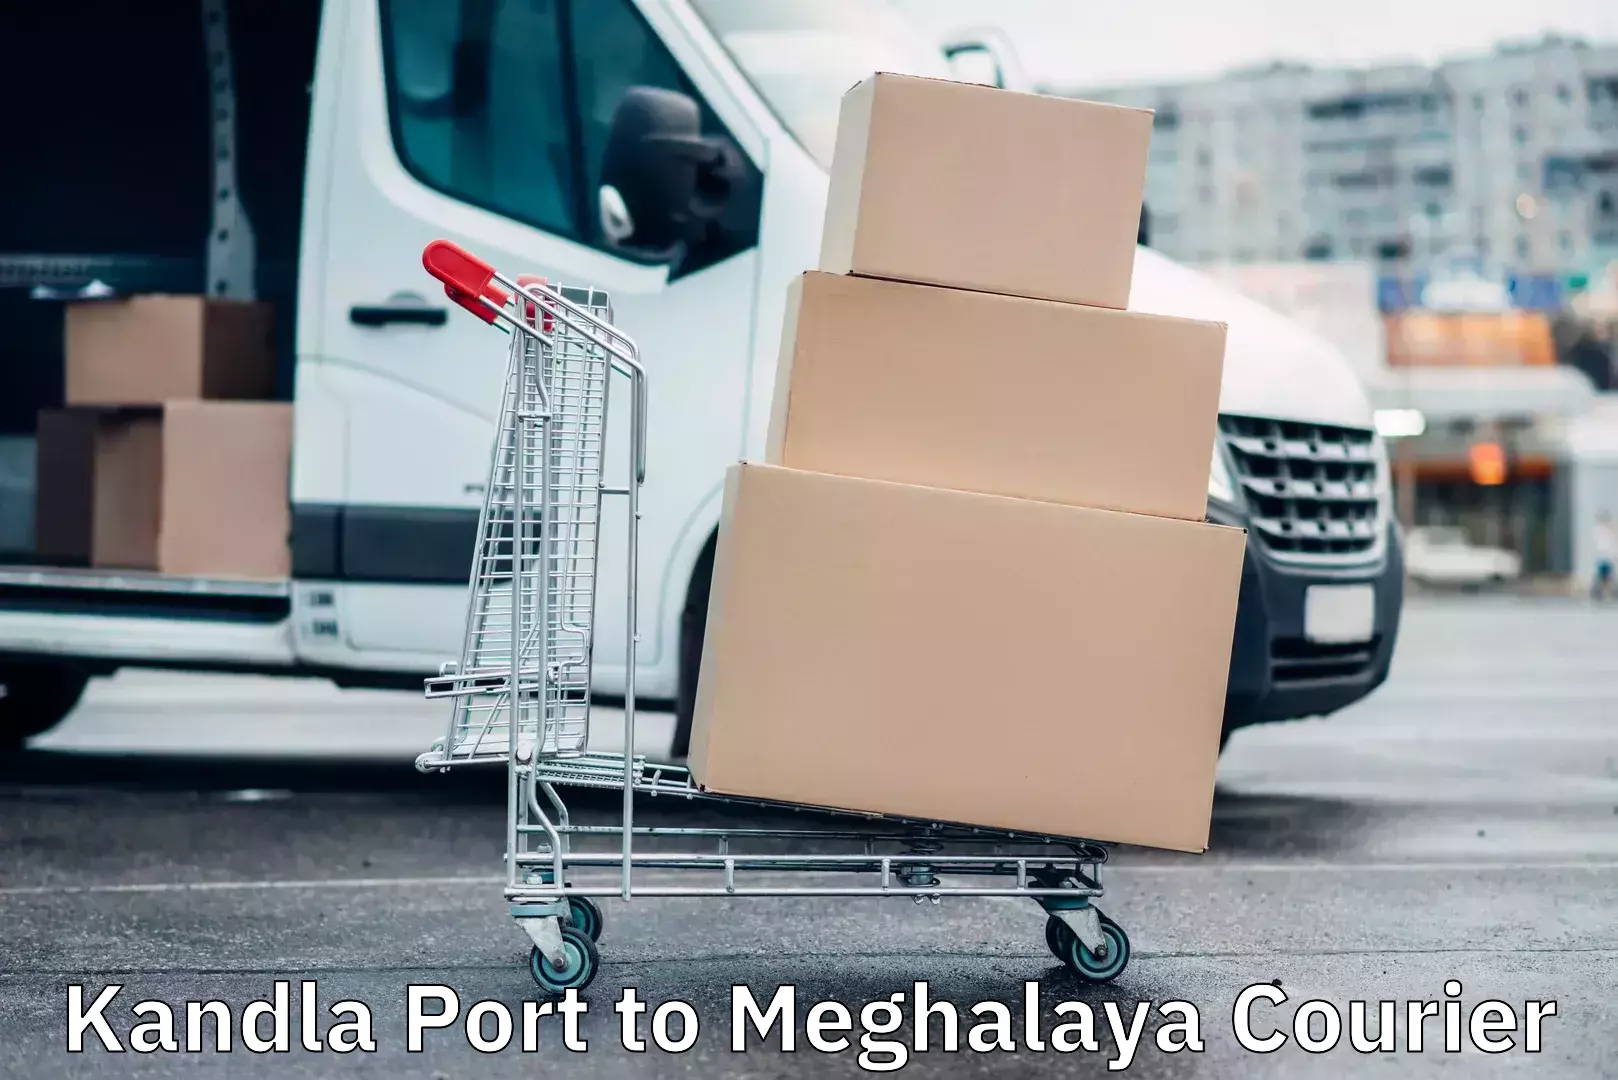 High-capacity courier solutions Kandla Port to Meghalaya